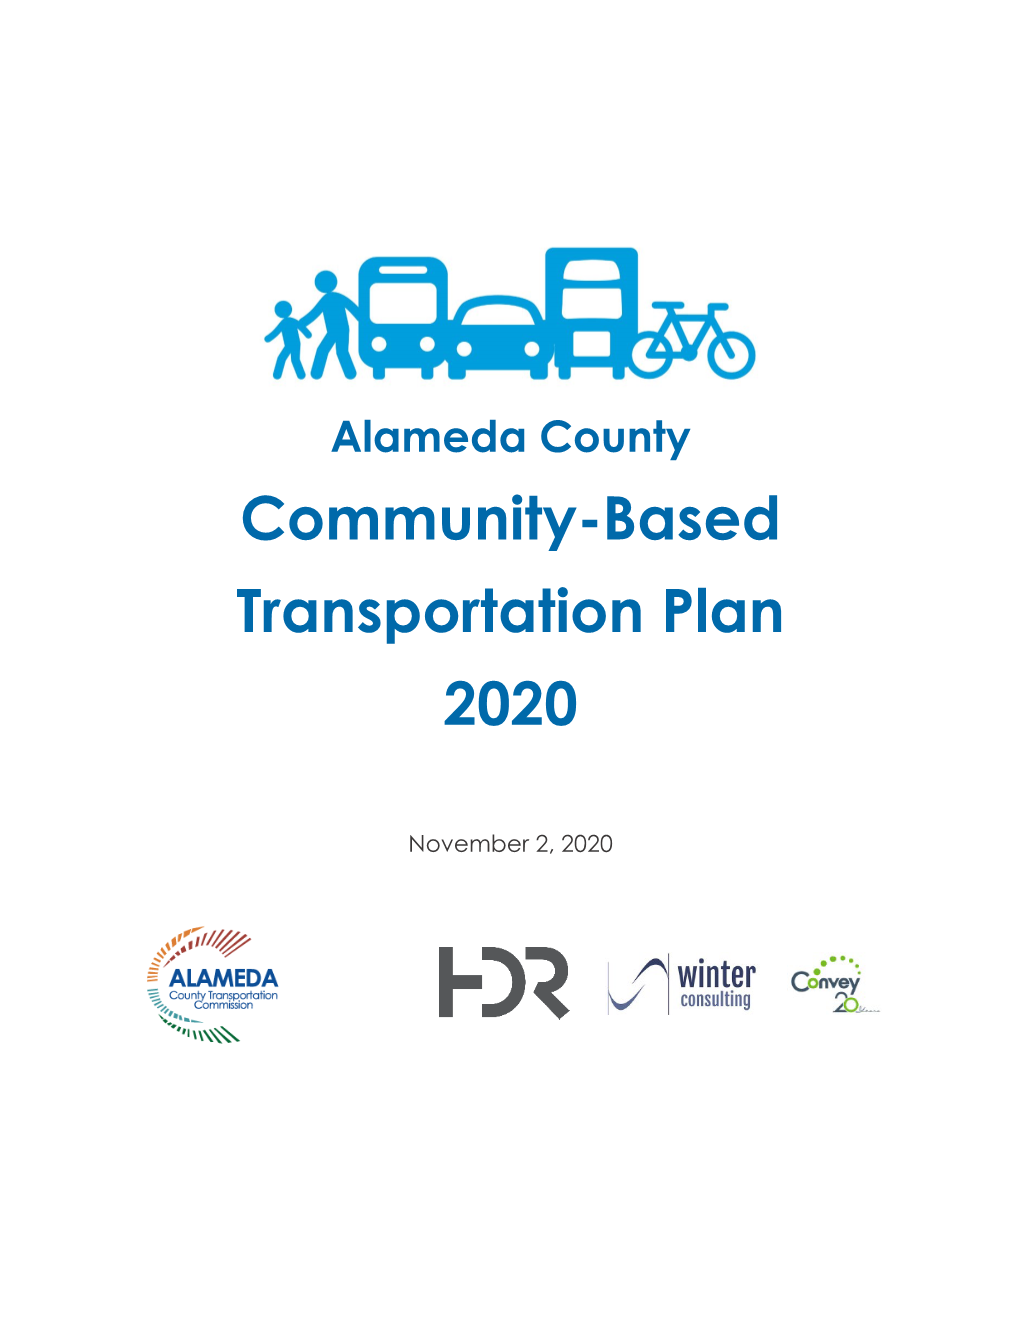 Alameda County Community-Based Transportation Plan 2020